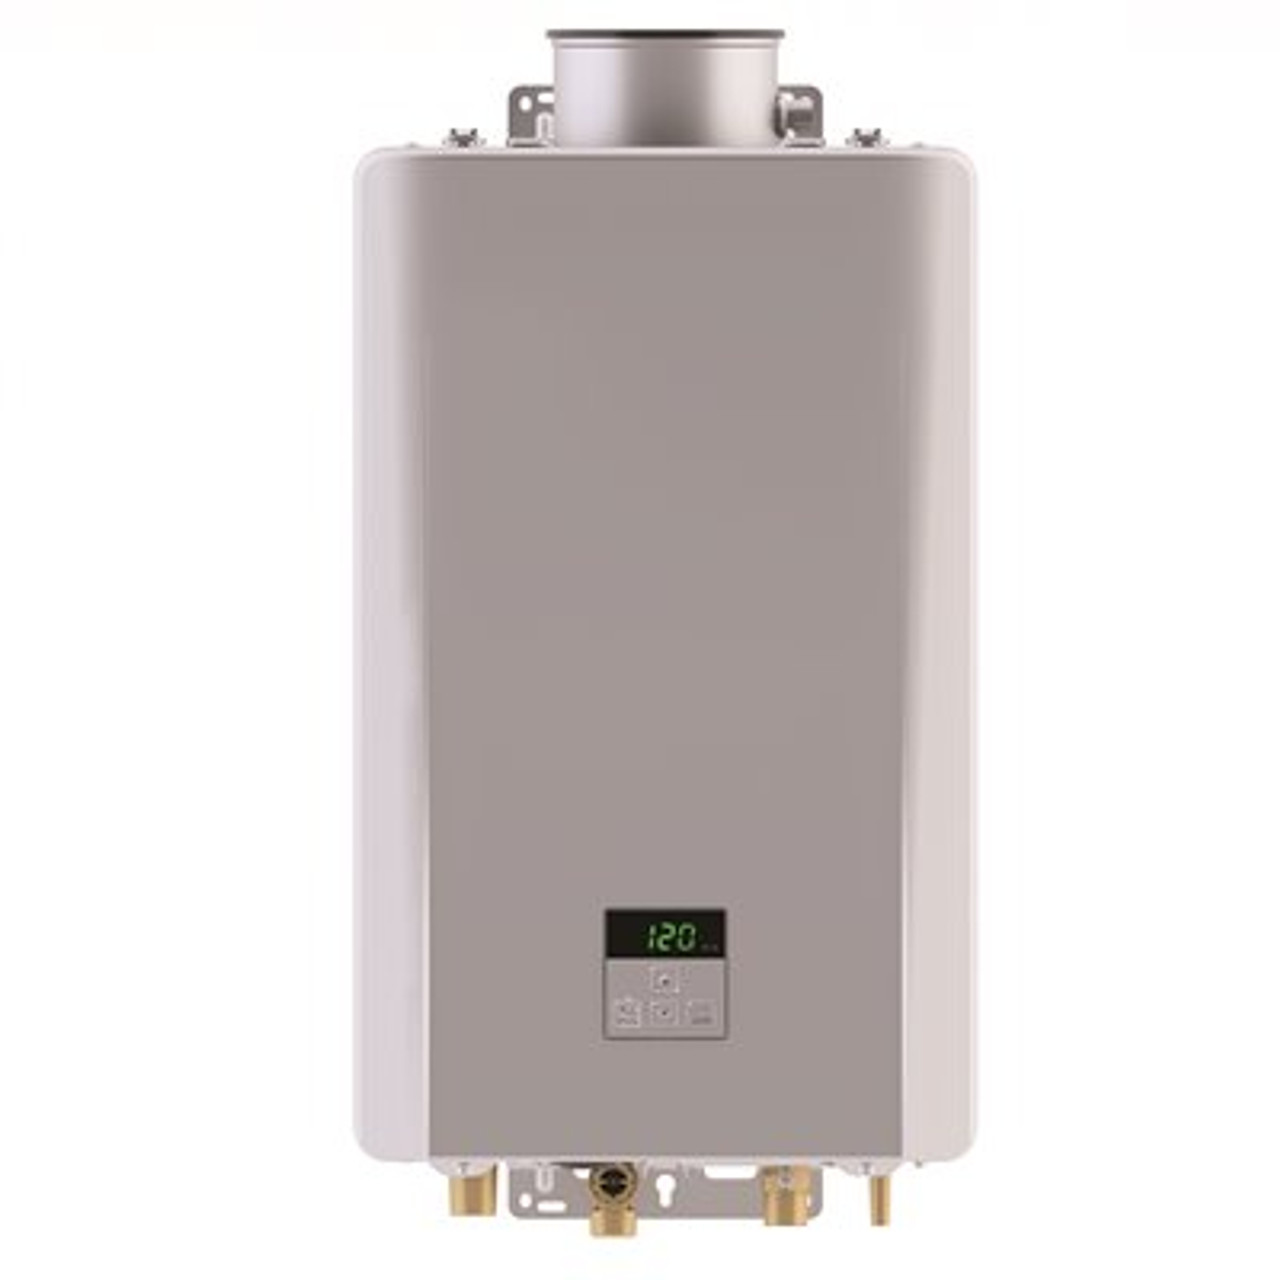 Rinnai Efficiency Series RE 8.5 GPM Residential 180,000 BTU Natural Gas Tankless Water Heater 15-Year Warranty